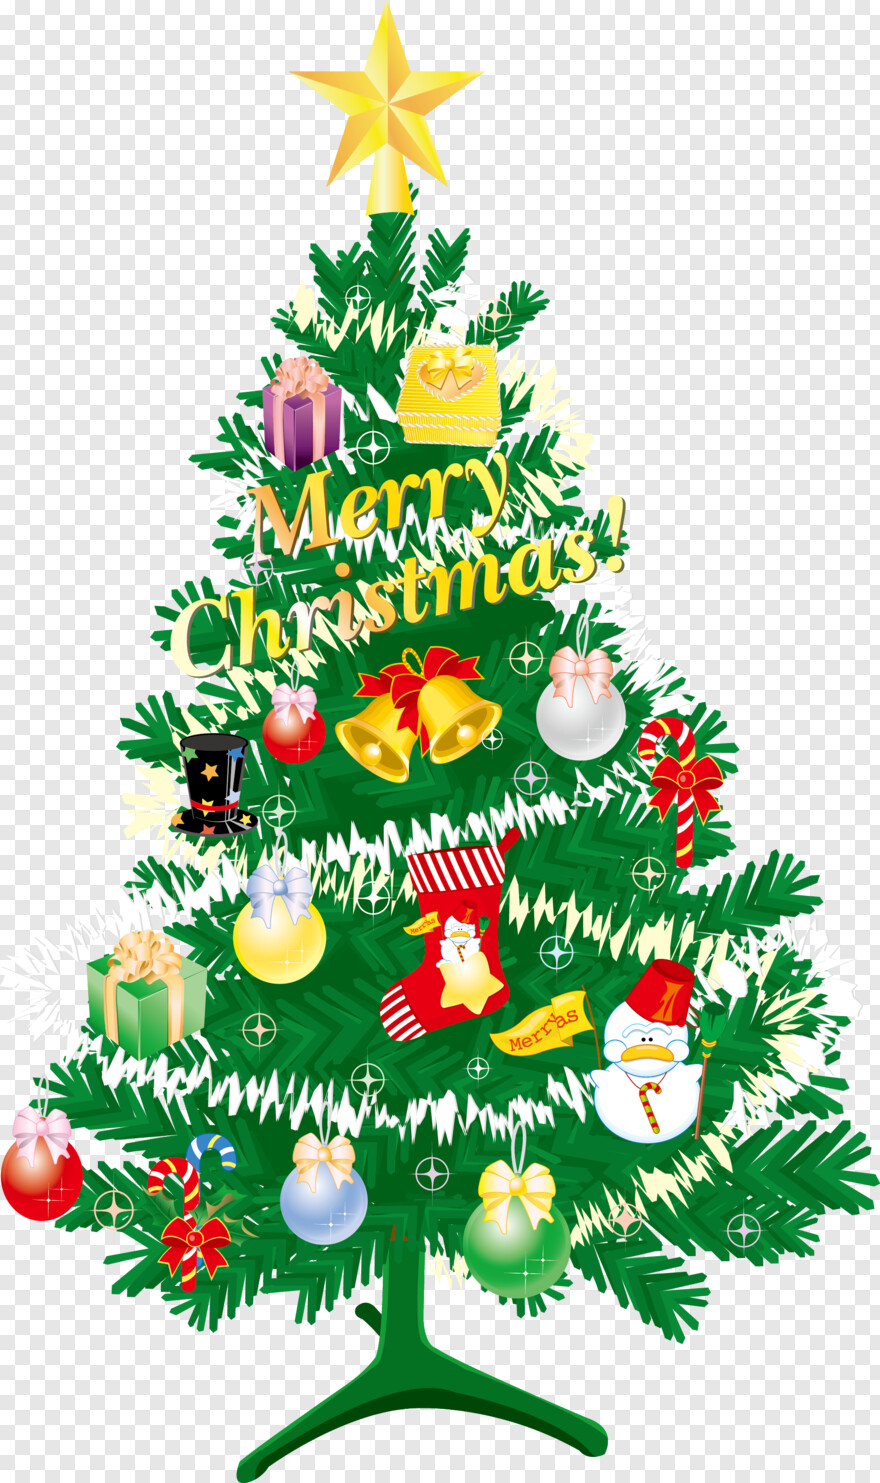 Christmas Tree Vector, Christmas Tree Clip Art, White Christmas Tree, Christmas  Tree Silhouette, Christmas Tree Clipart, Christmas Tree Branch #460203 -  Free Icon Library